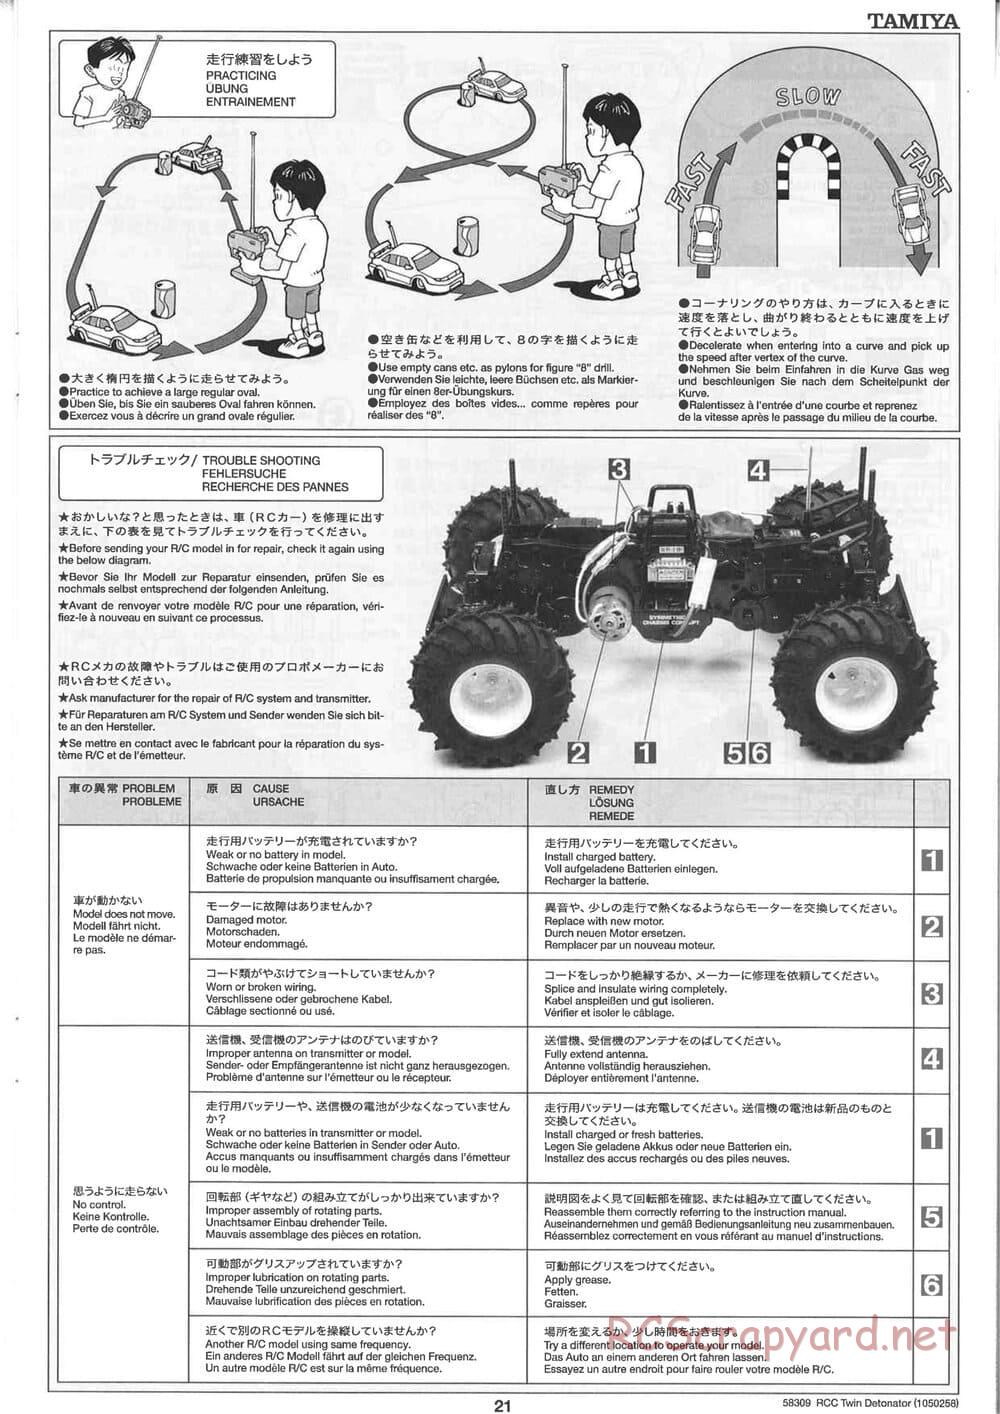 Tamiya - Twin Detonator - WR-01 Chassis - Manual - Page 21